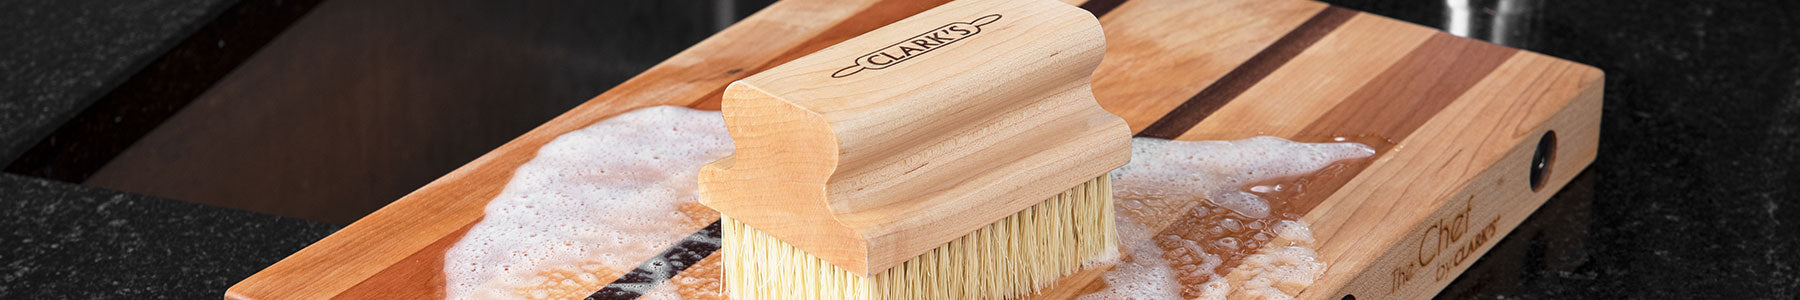 CLARKS Large Surface Scrub Brush - Tampico Fibers & USA Made